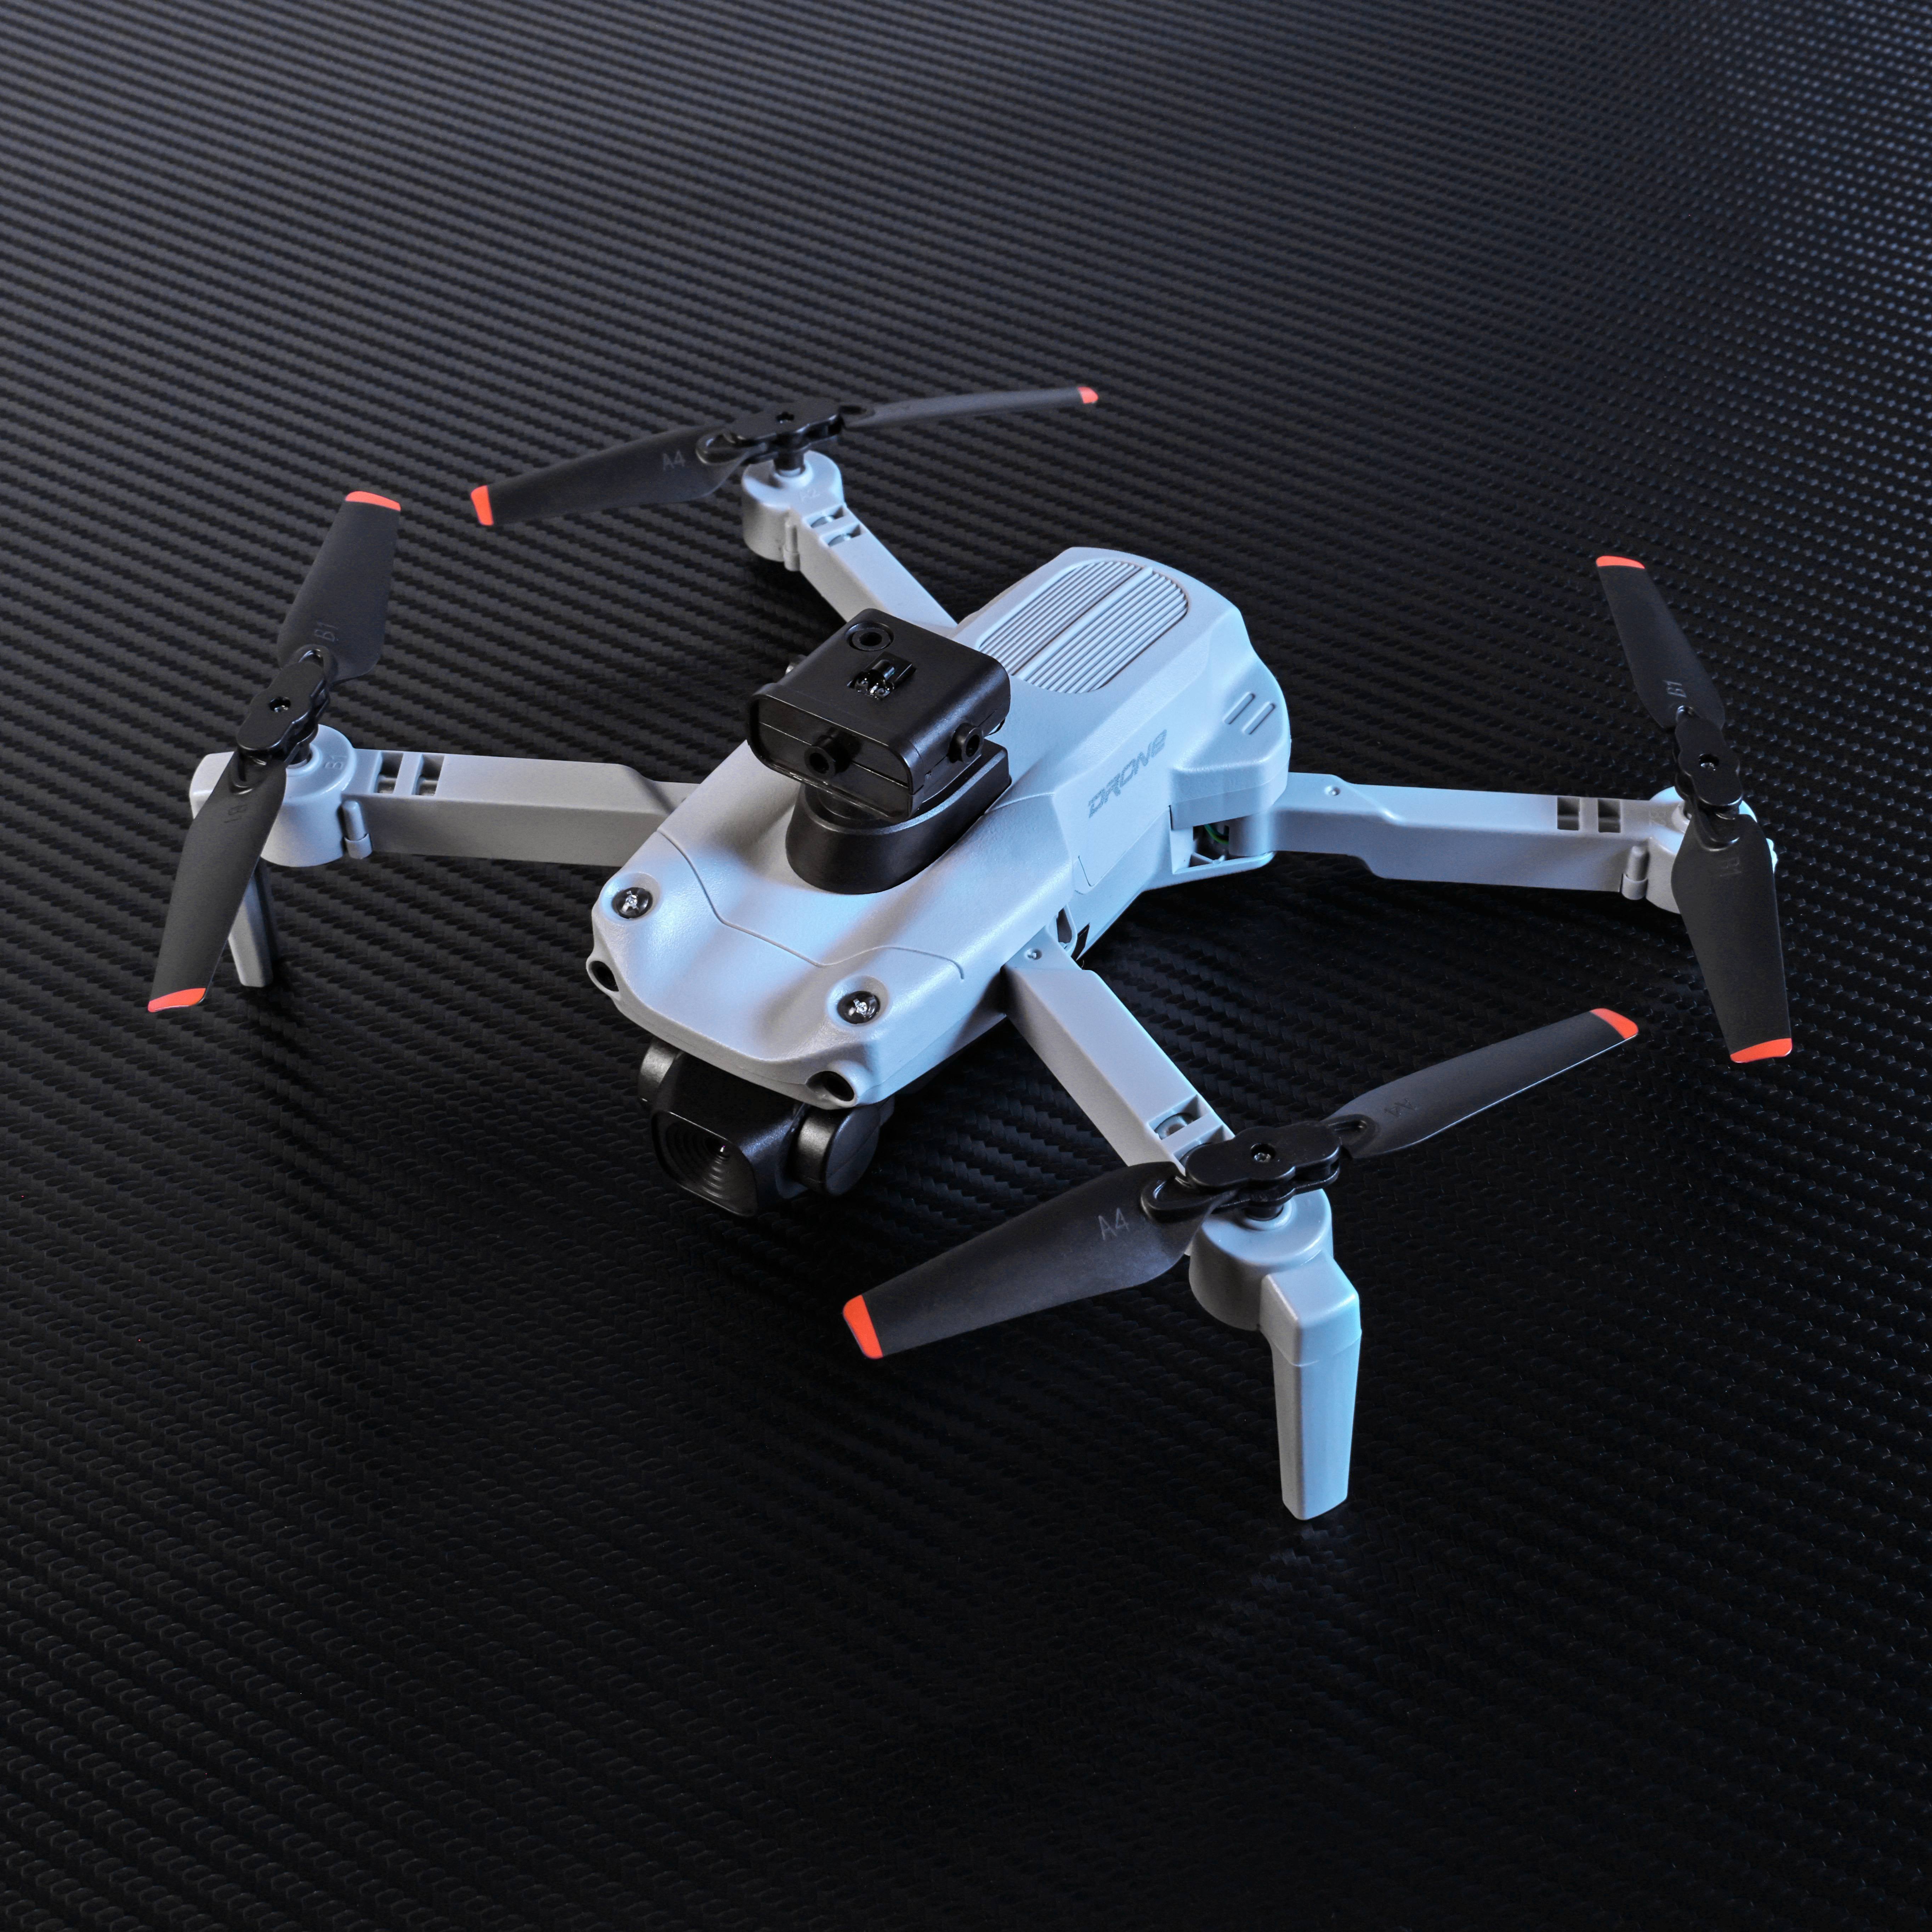 Dron con cámara para adultos, mini dron, dron FPV plegable con control  remoto con motor sin escobillas, giros 3D, retención de altitud, modo sin